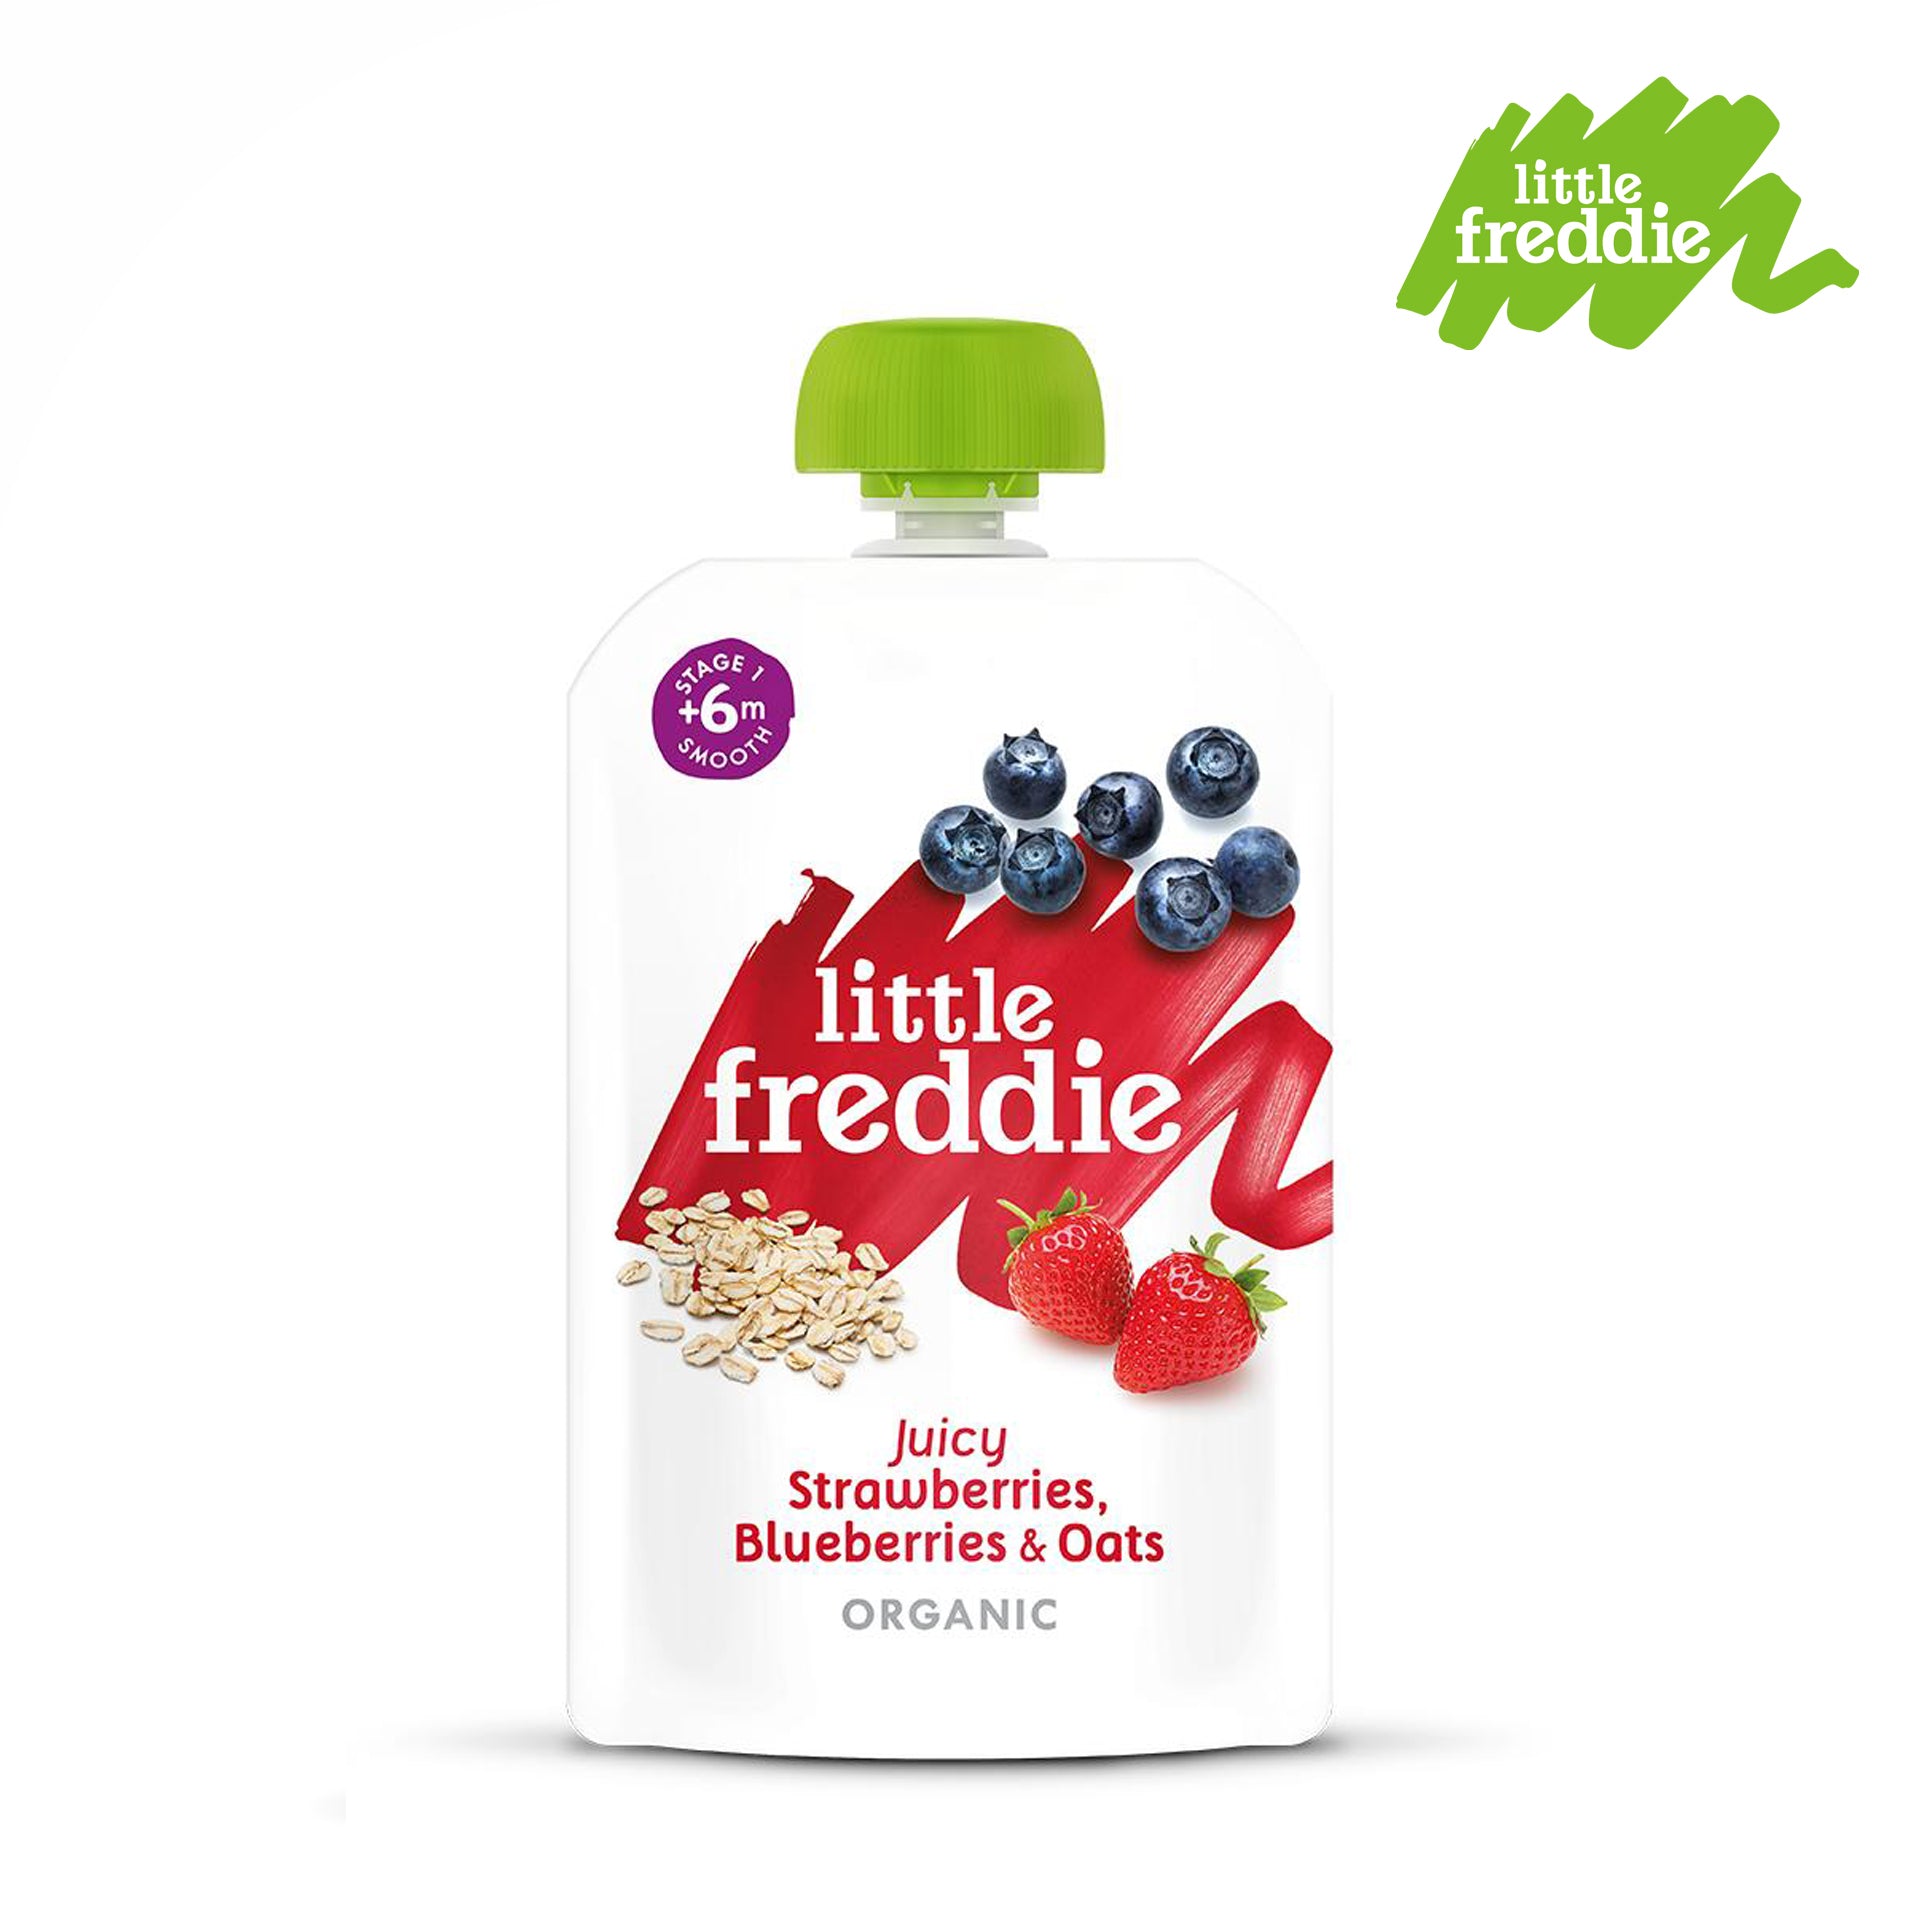 Little Freddie Juicy Strawberries, Blueberries & Oats 100g